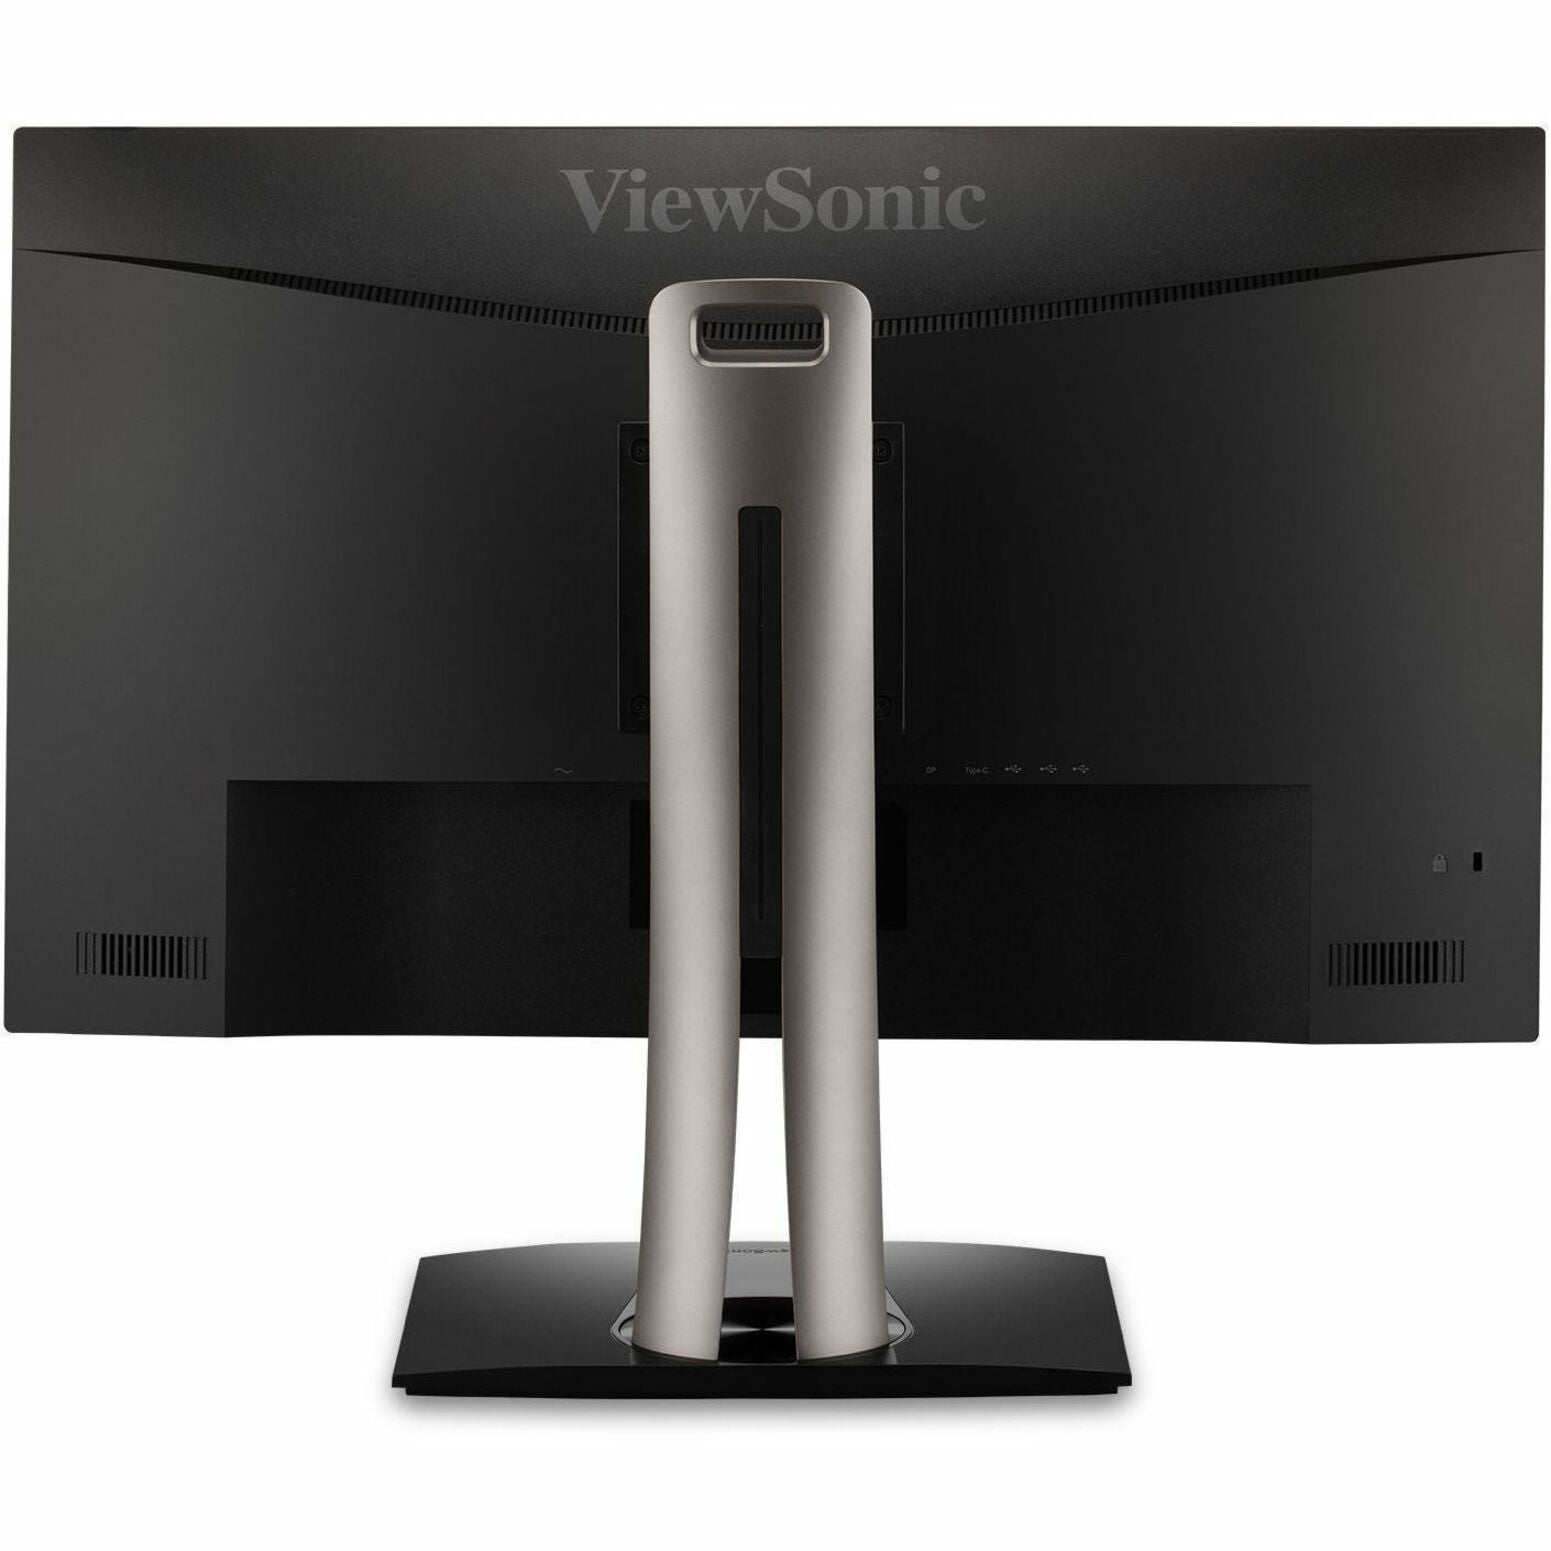 ViewSonic VP275-4K ColorPro 4K UHD Ergonomic Designed for Surface Monitor with USB C, 27" LED Monitor